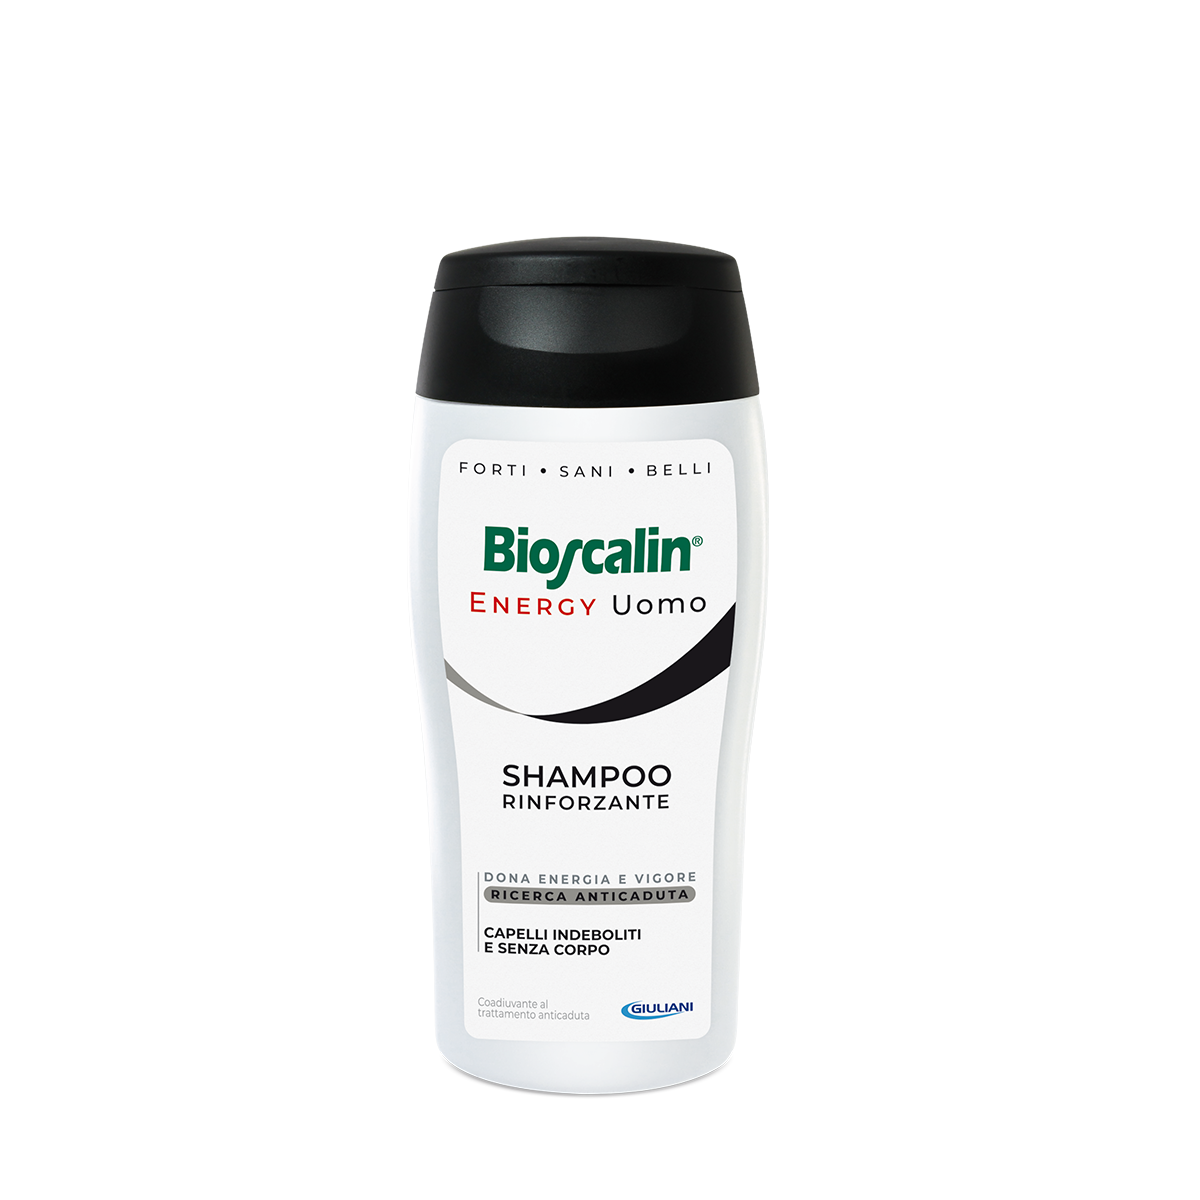 Bioscalin Energy Uomo shampoo